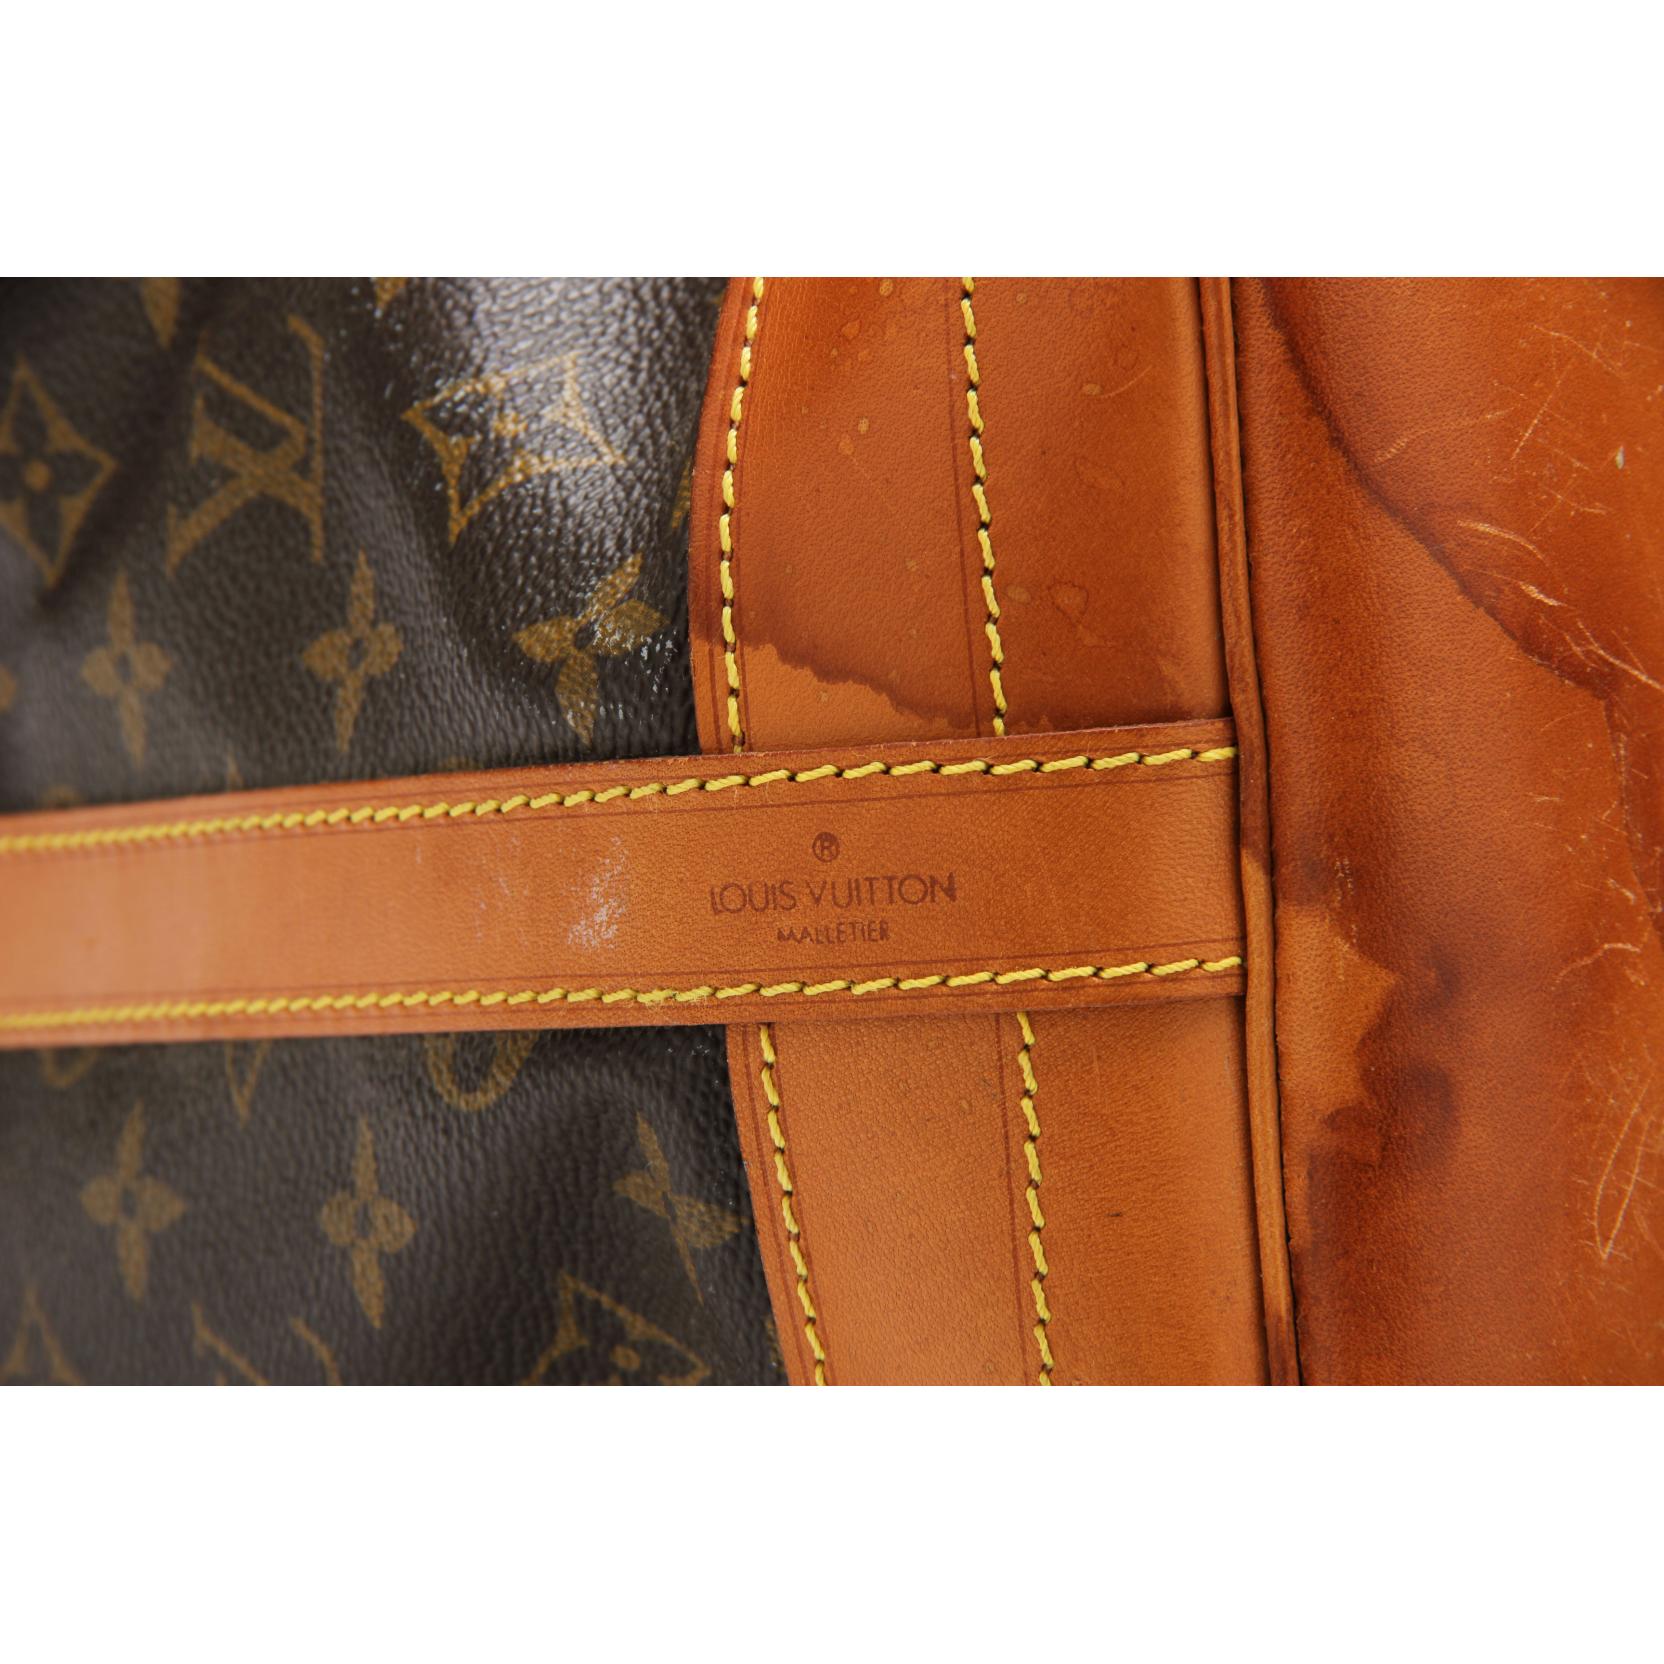 Vintage Drawstring Hobo Bag, Louis Vuitton (Lot 705 - The Fall